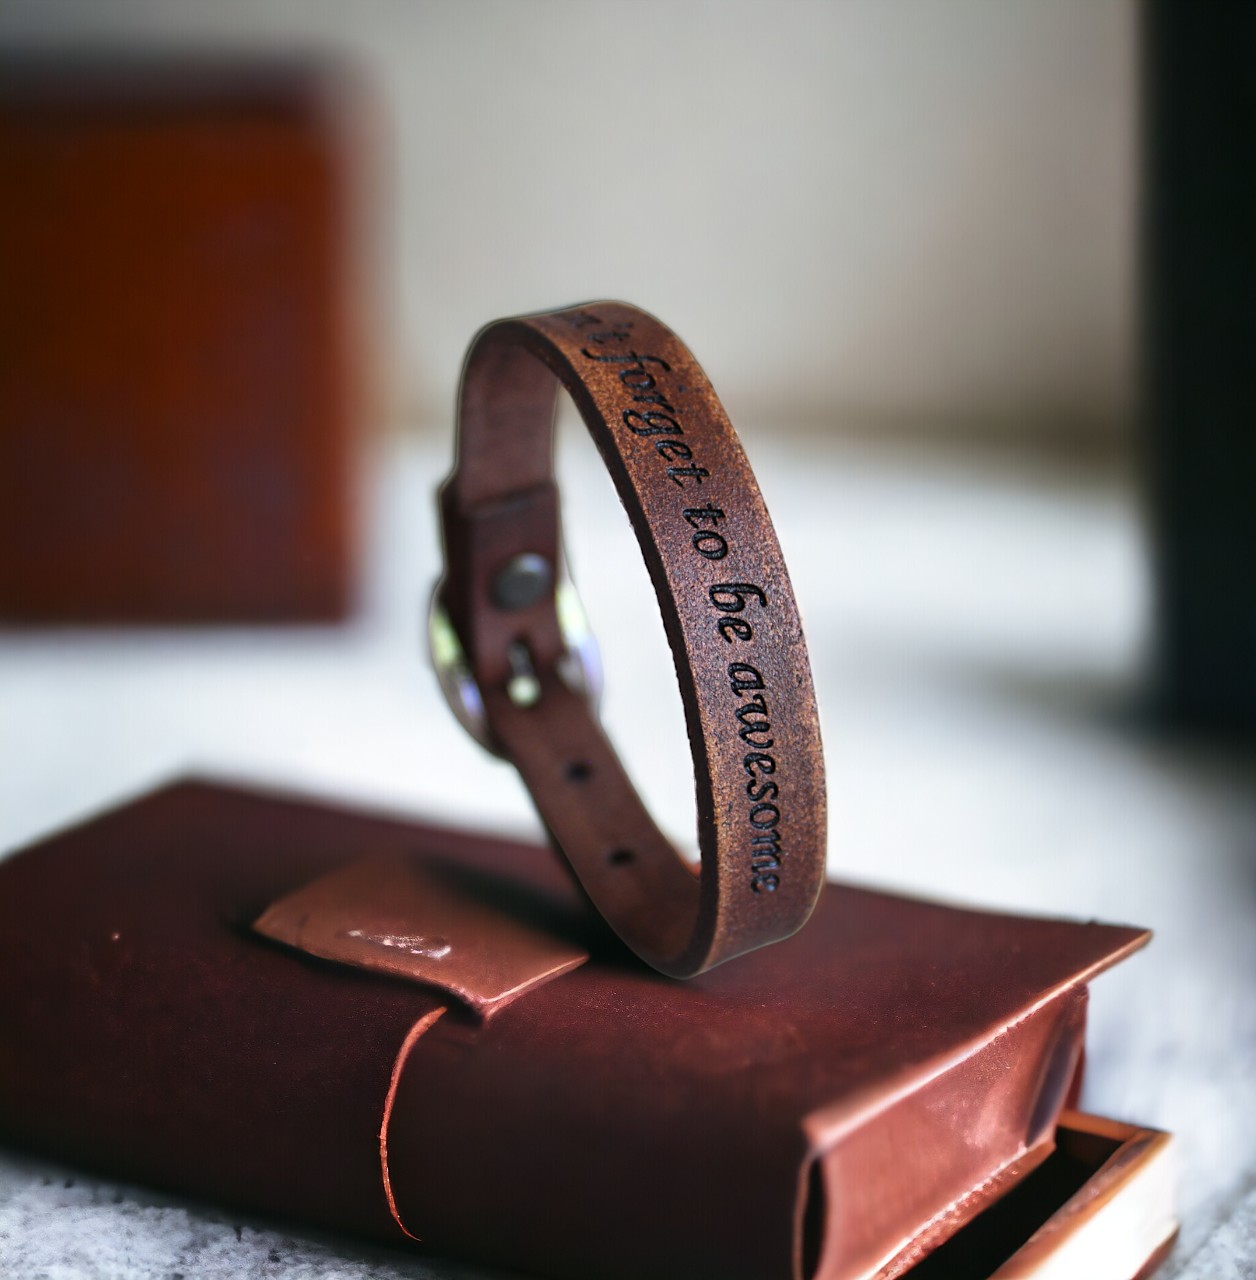 Personalized leather bracelets with secret message option